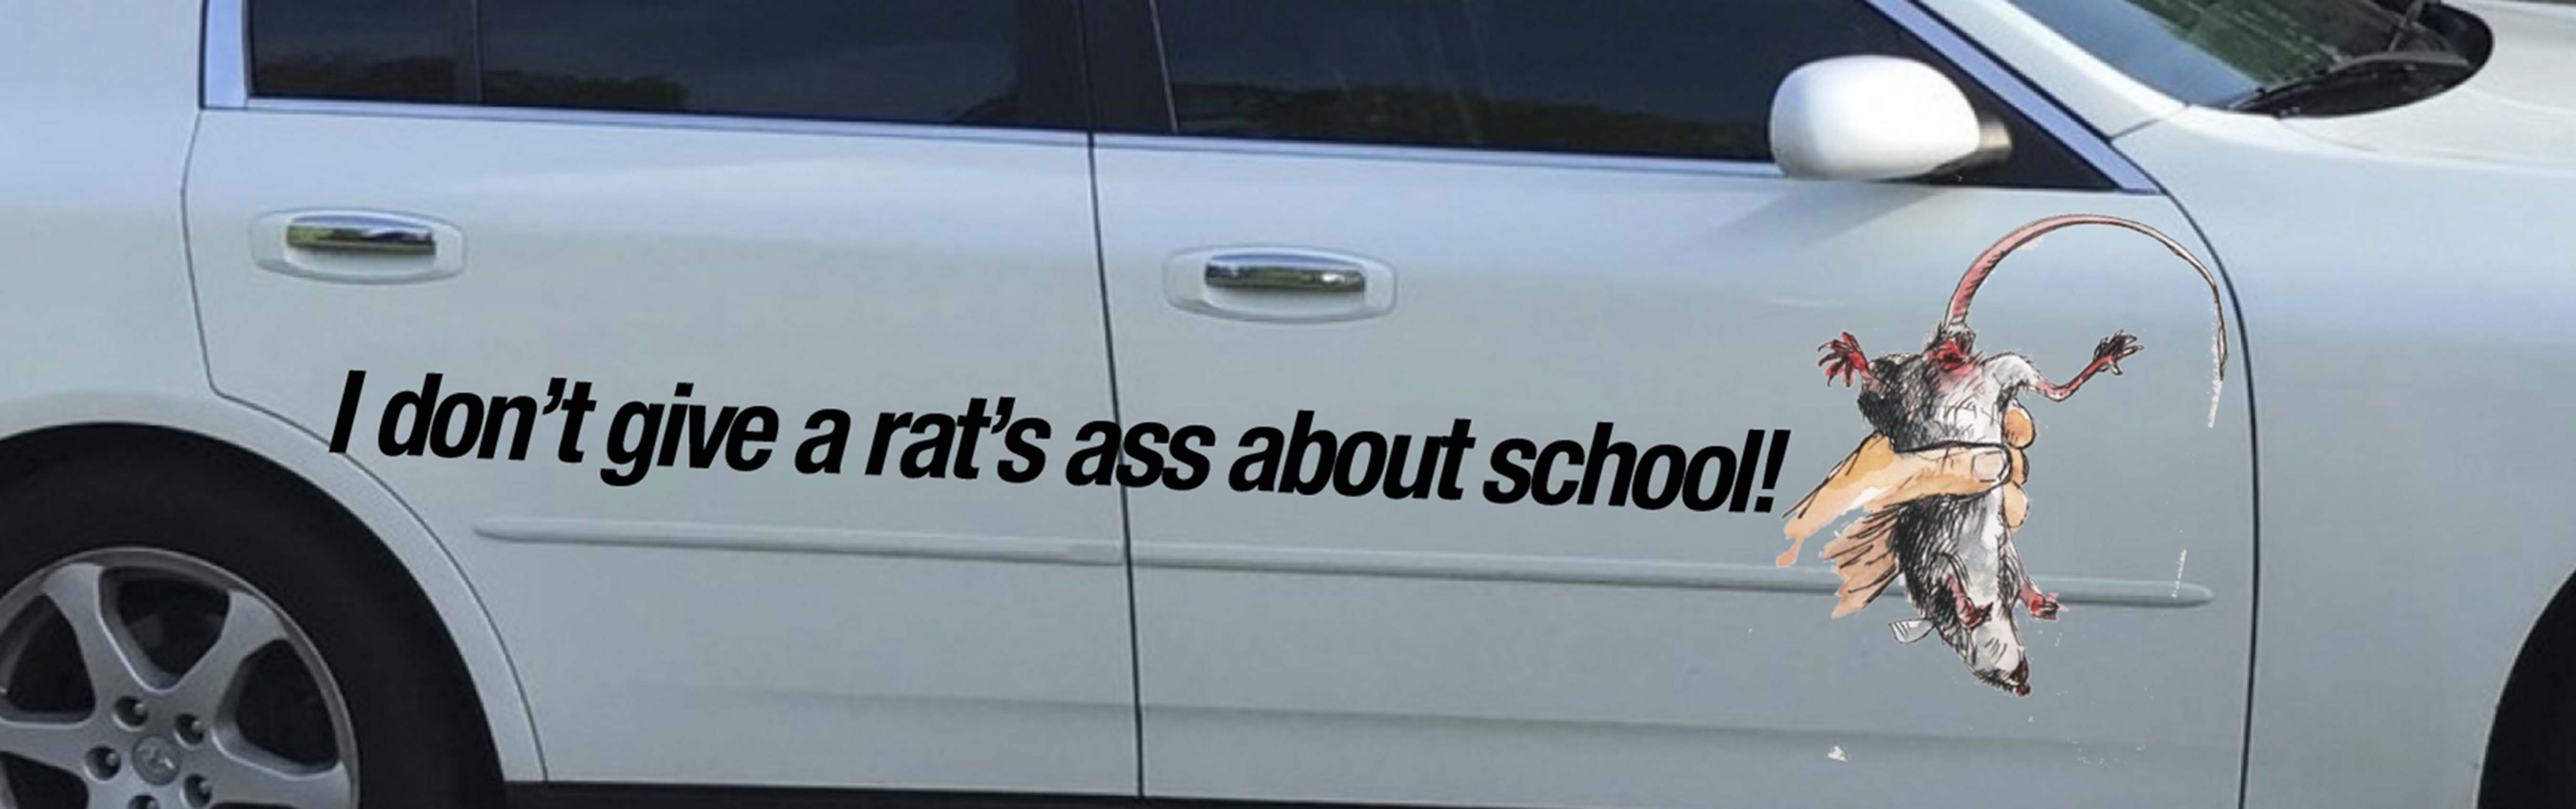 schoolcar2.jpg